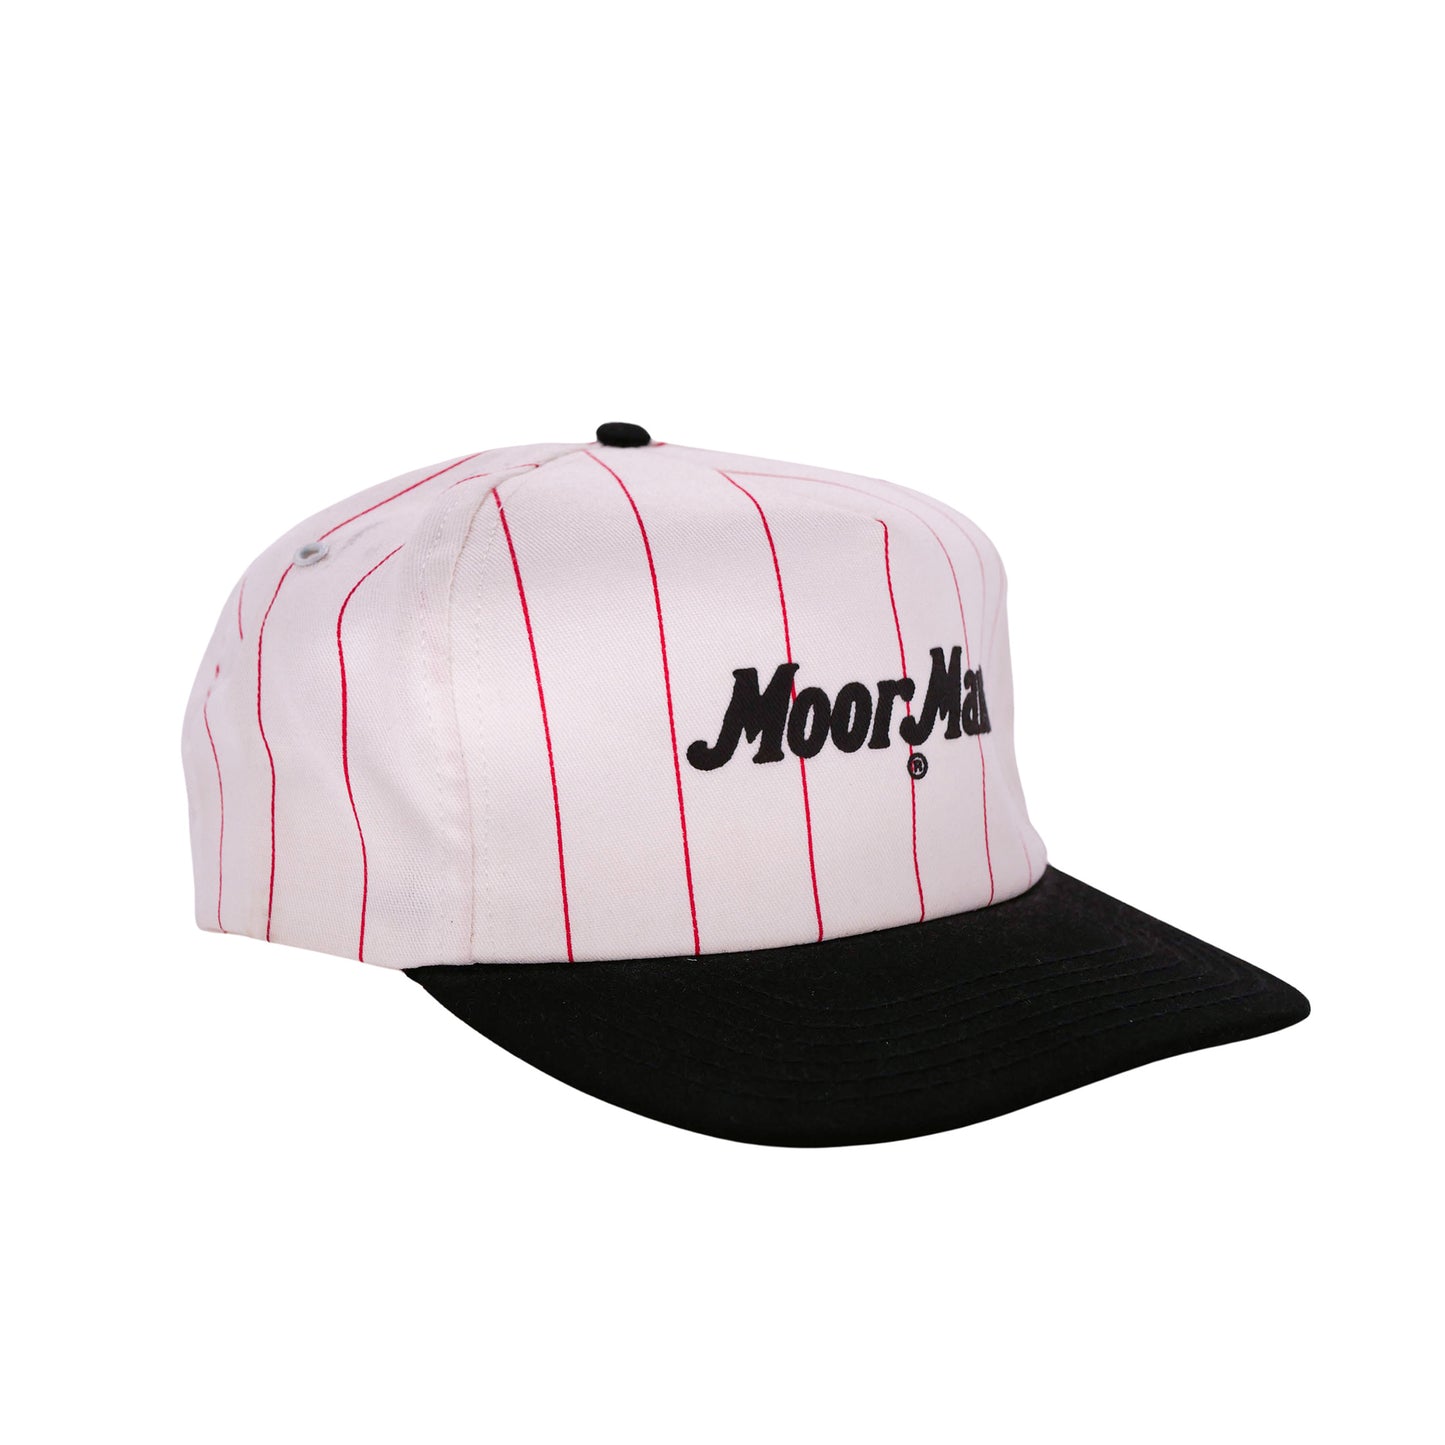 MOOR MANS BASEBALL CAP